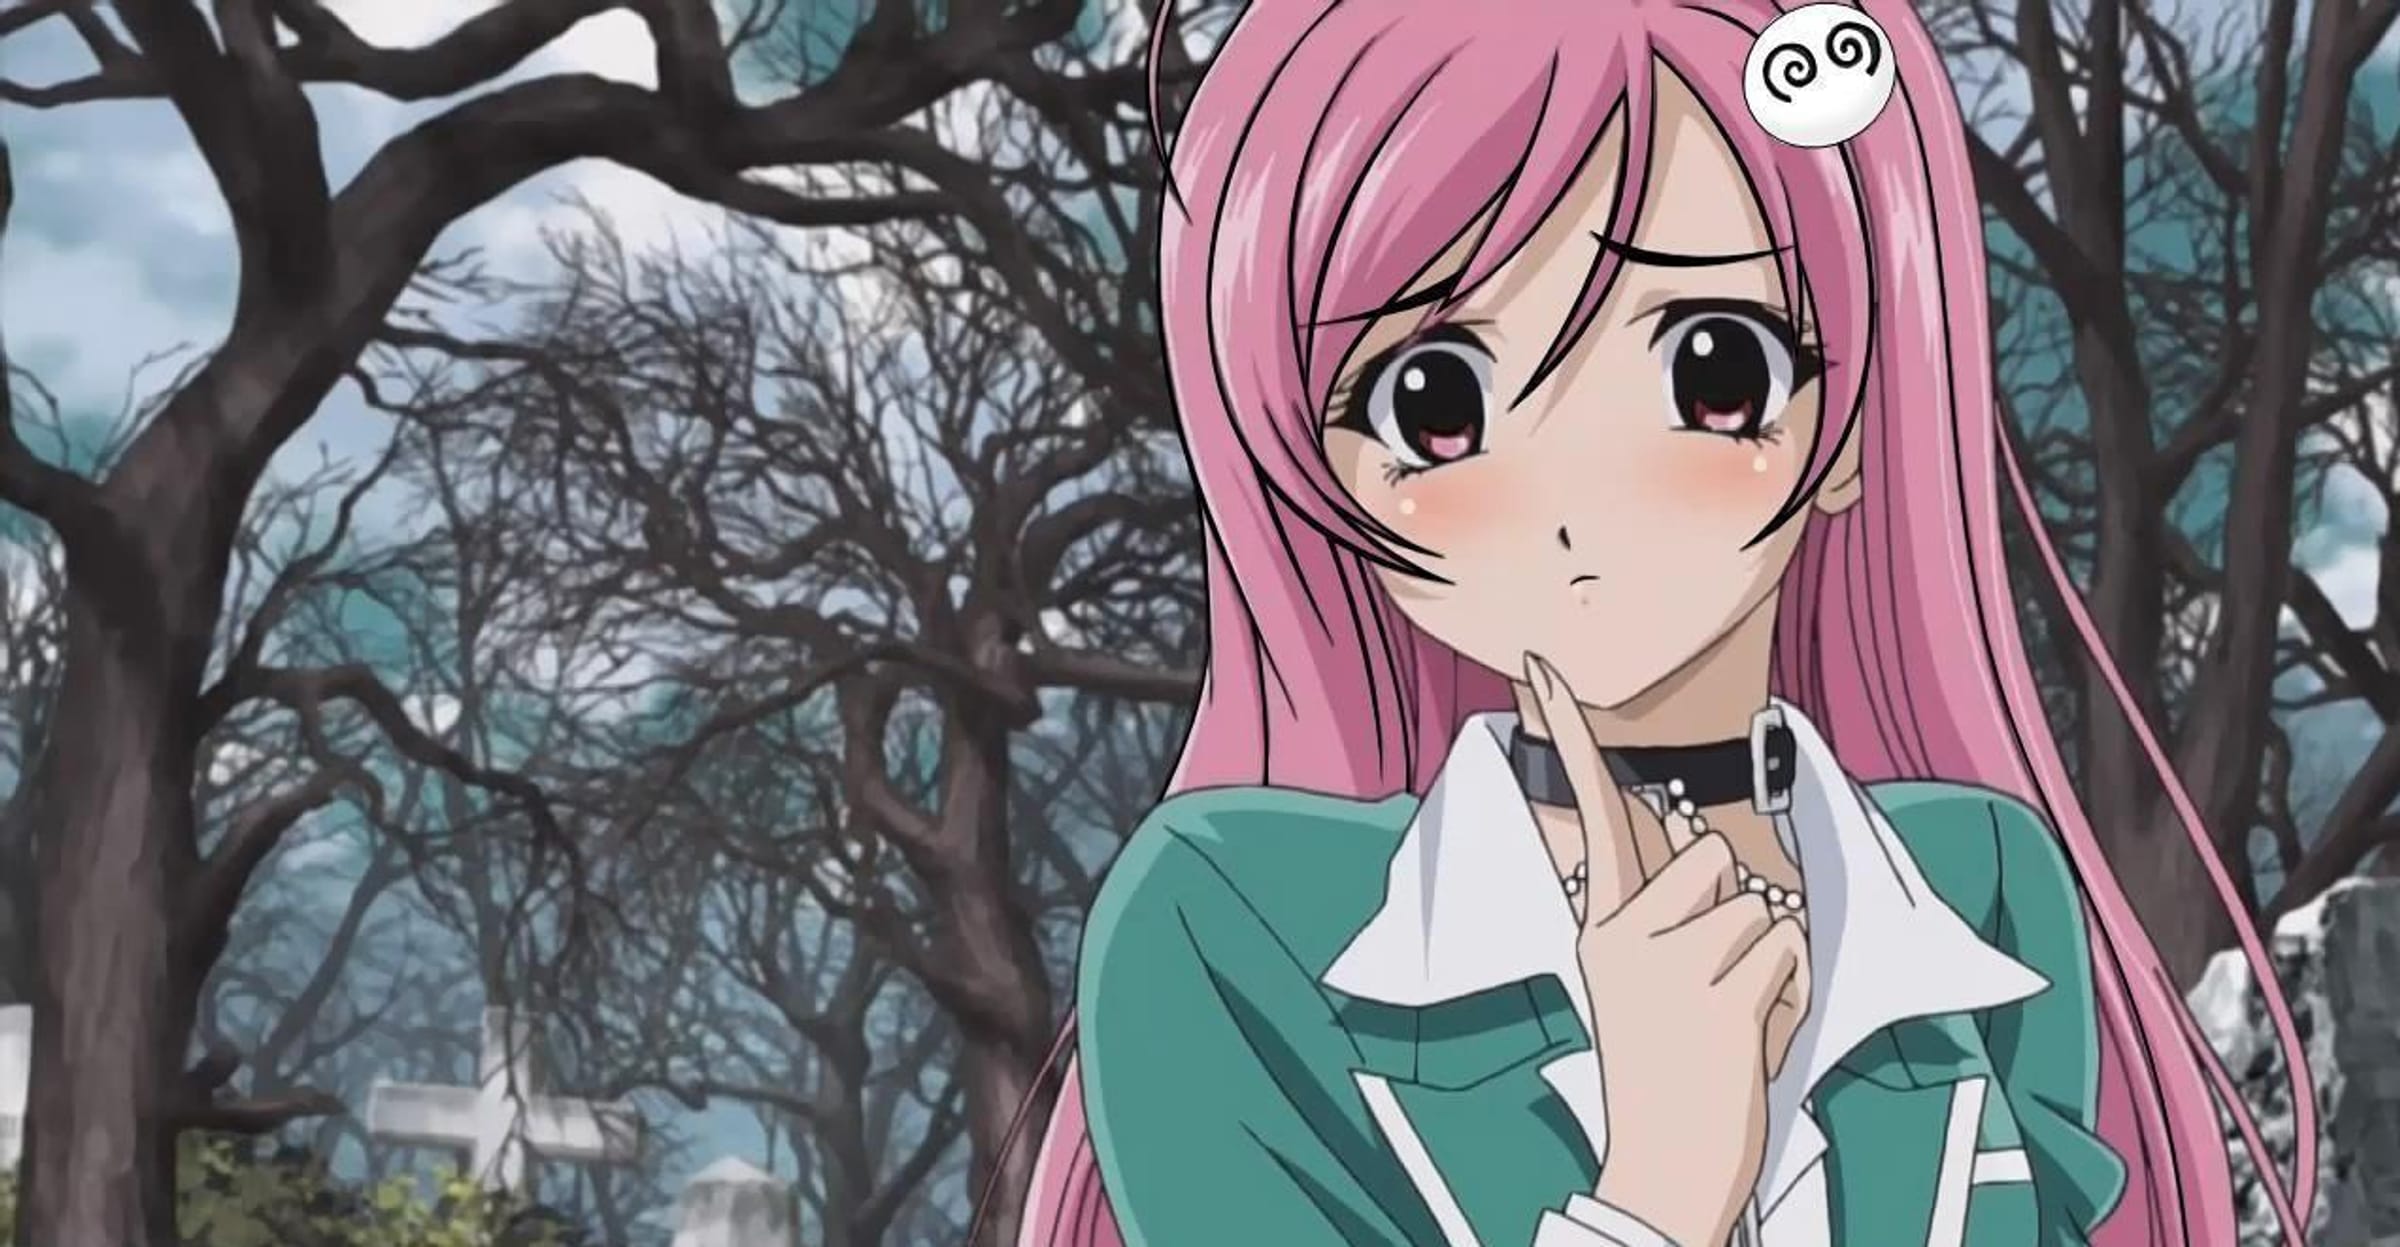 anime girl with long pink hair